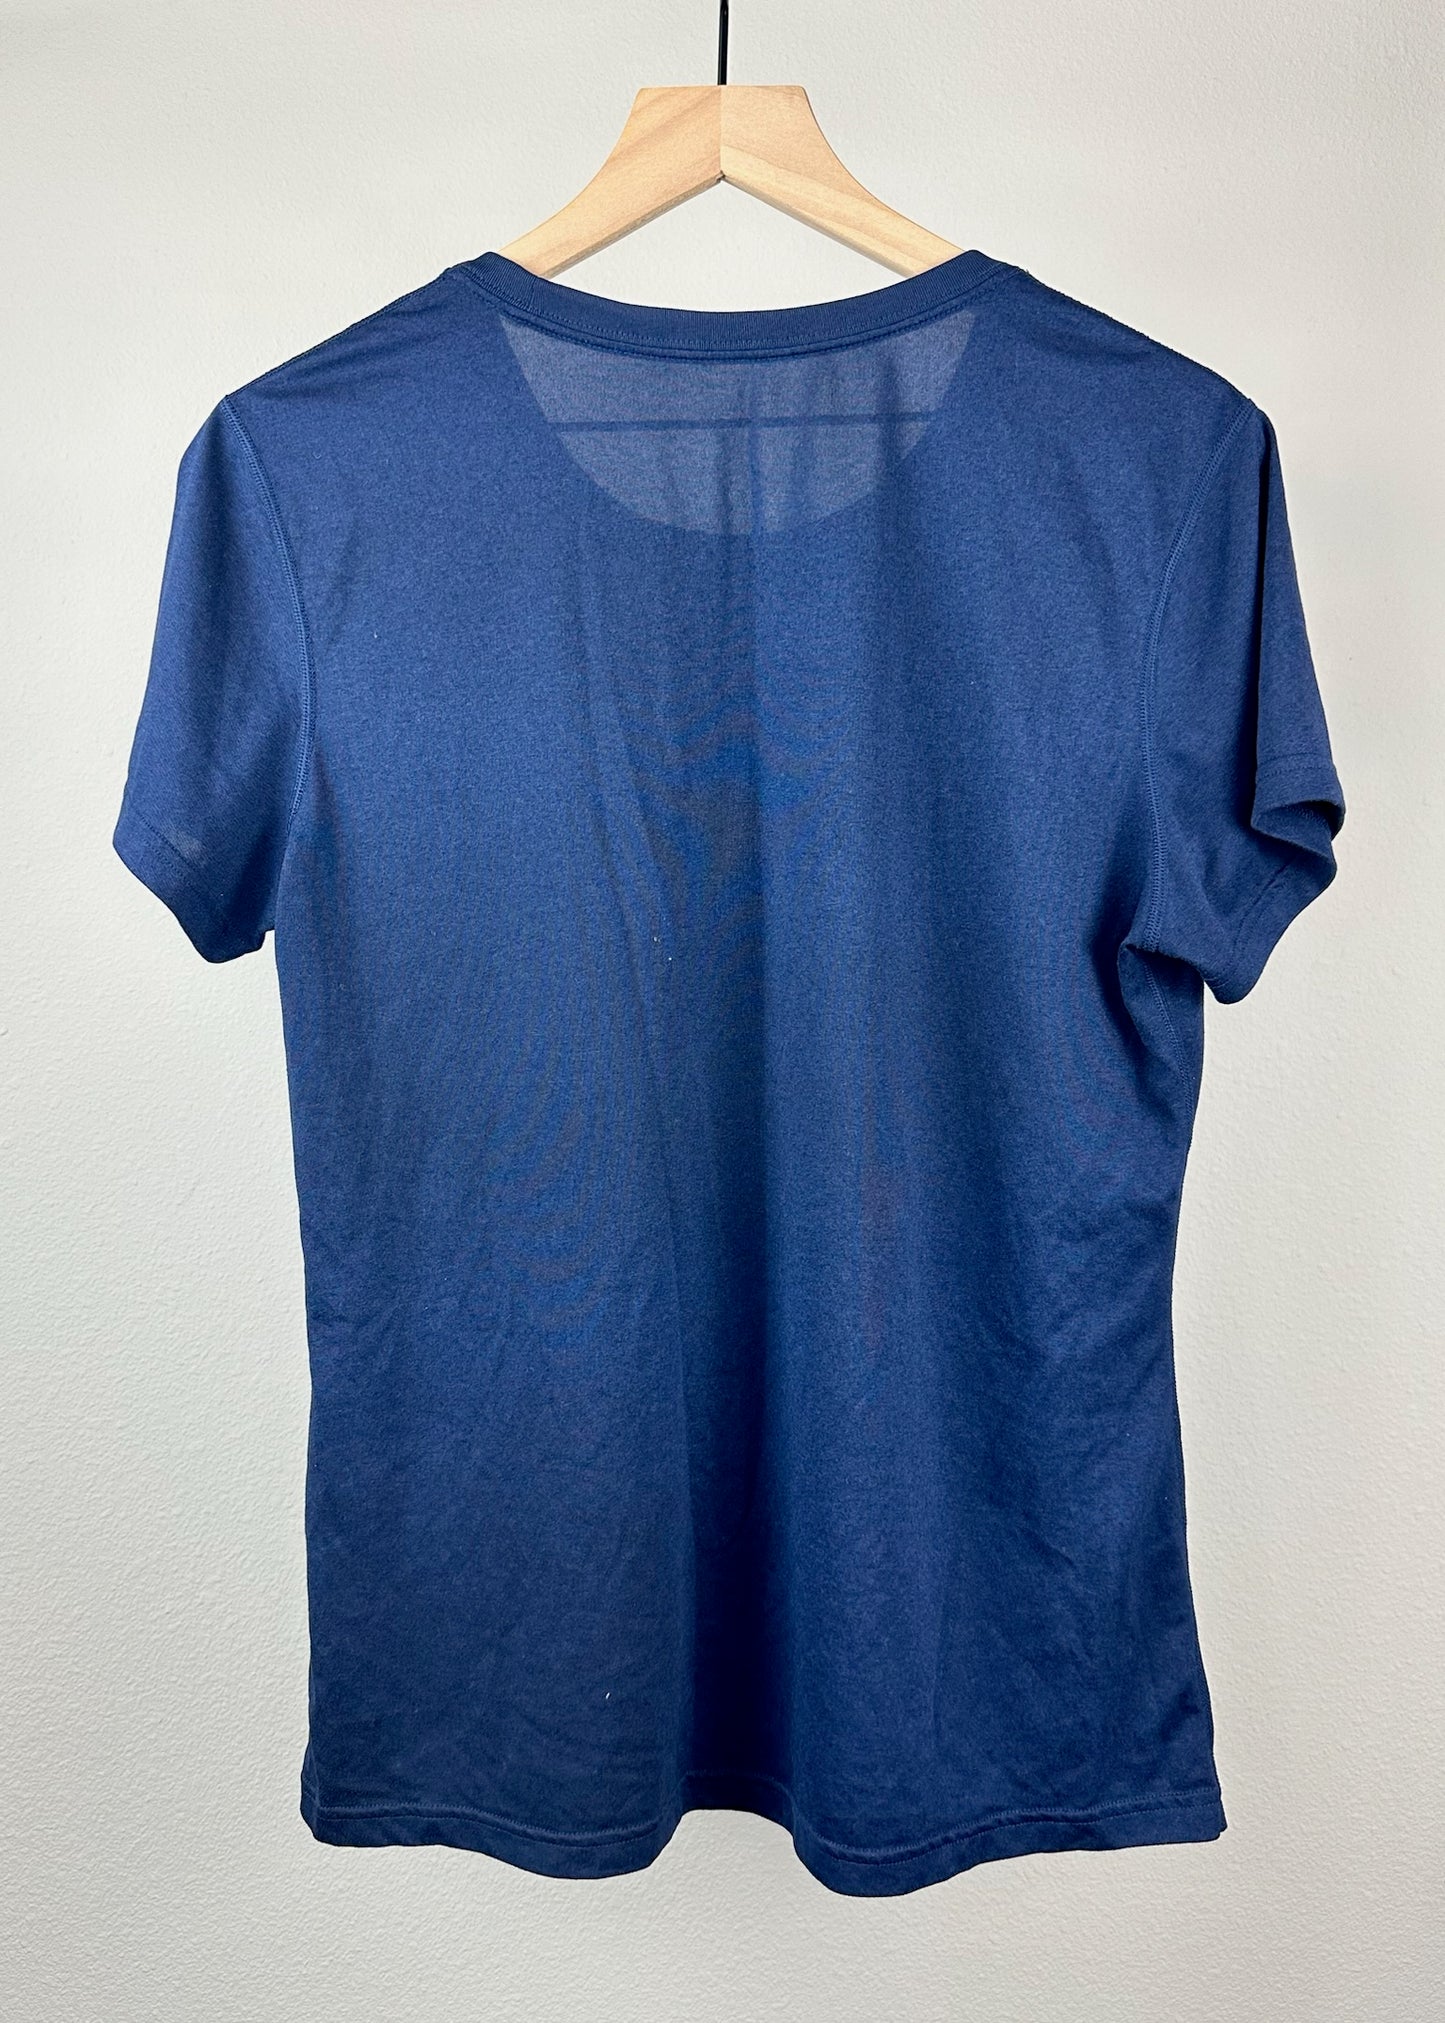 Navy Dri-Fit T-Shirt by Nike